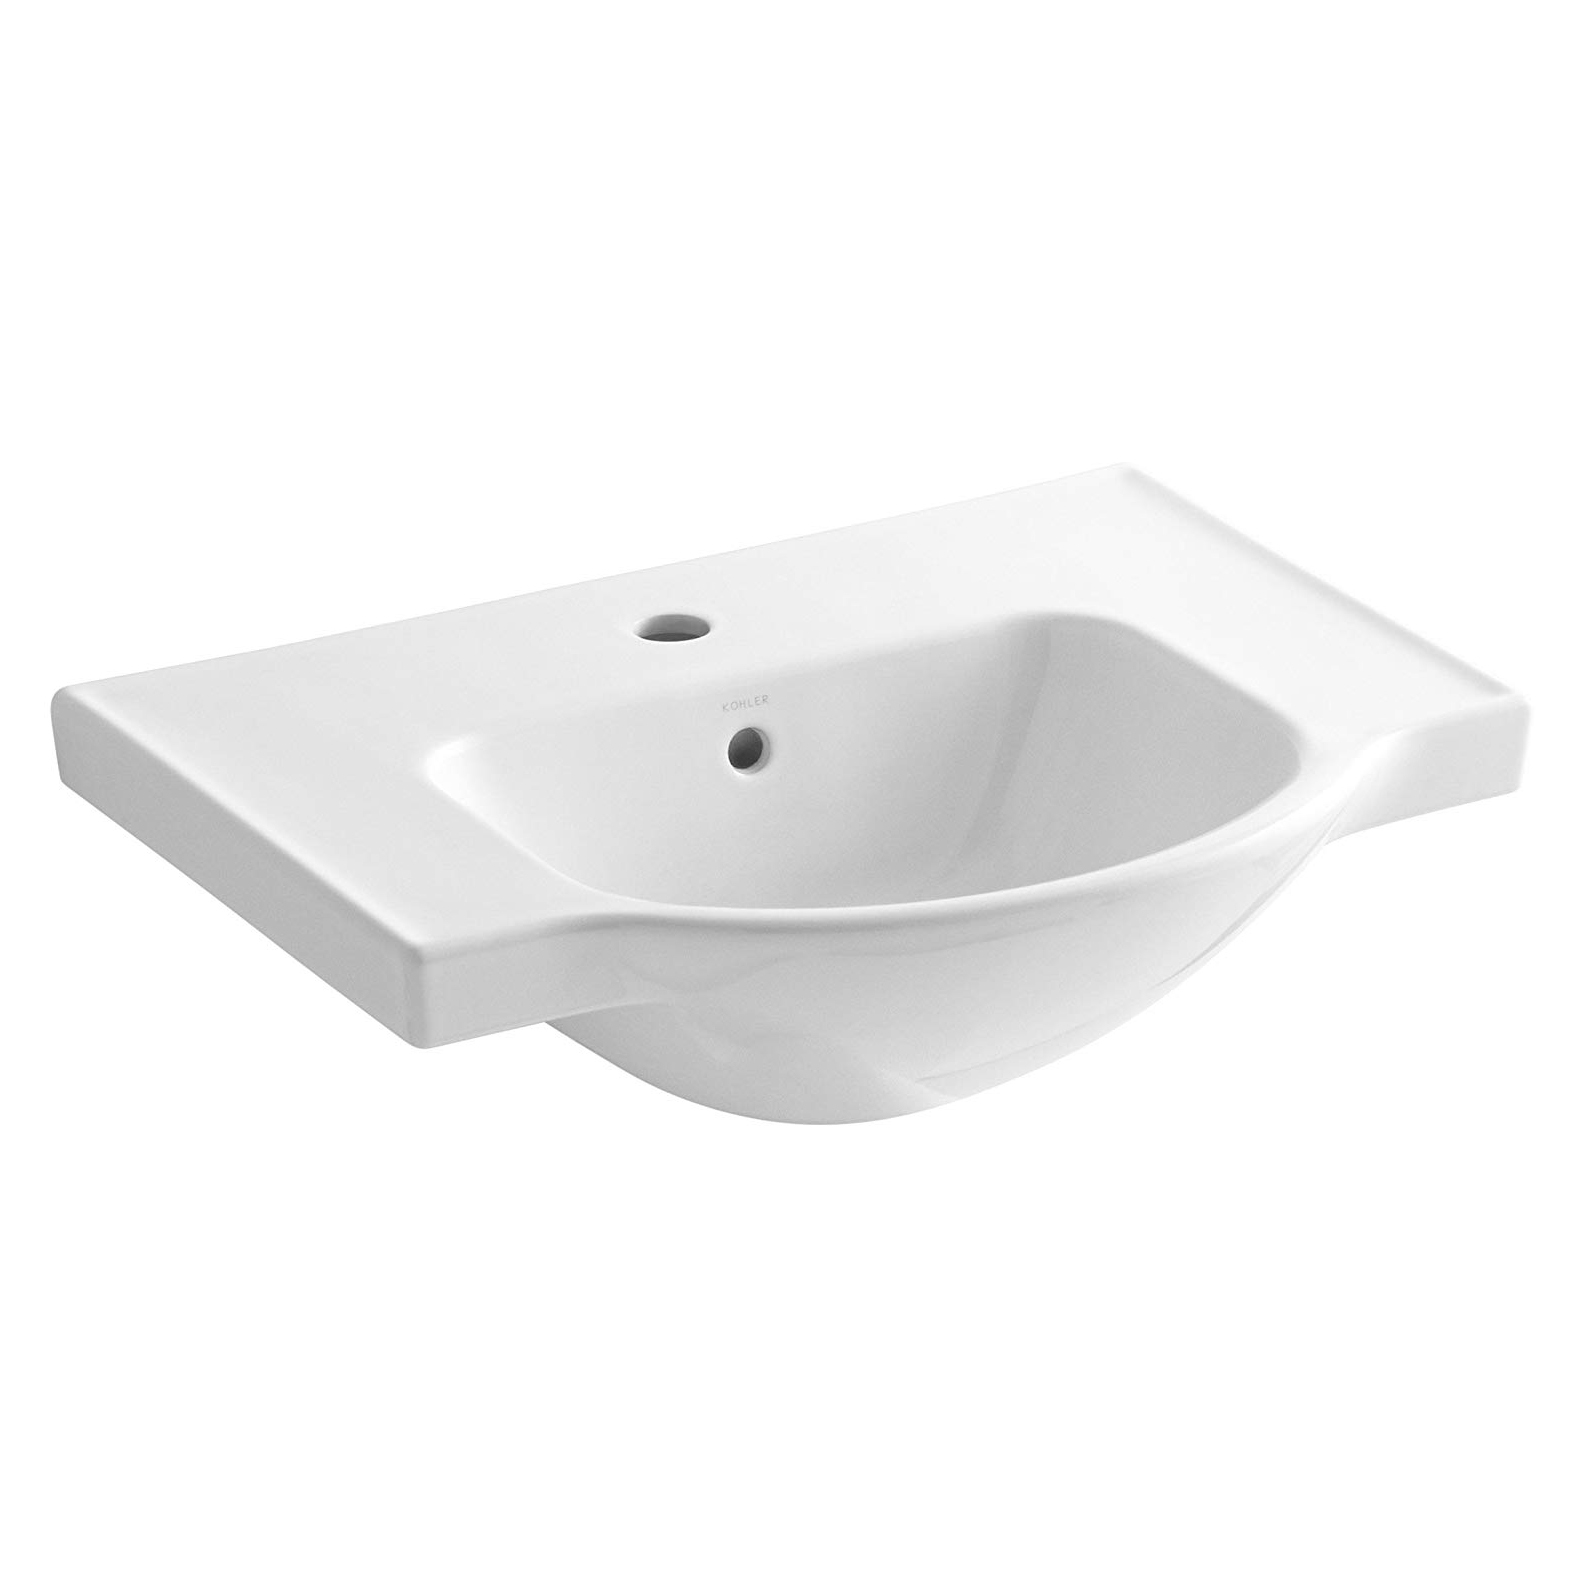 Veer 24" Single Hole Pedestal Sink in White